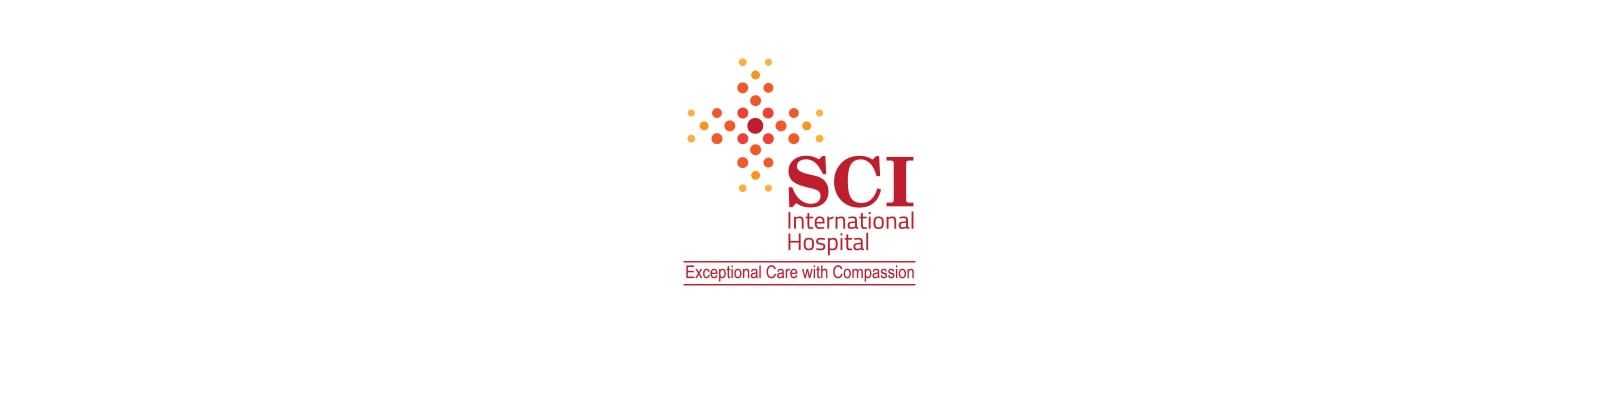 Sci International Hospital